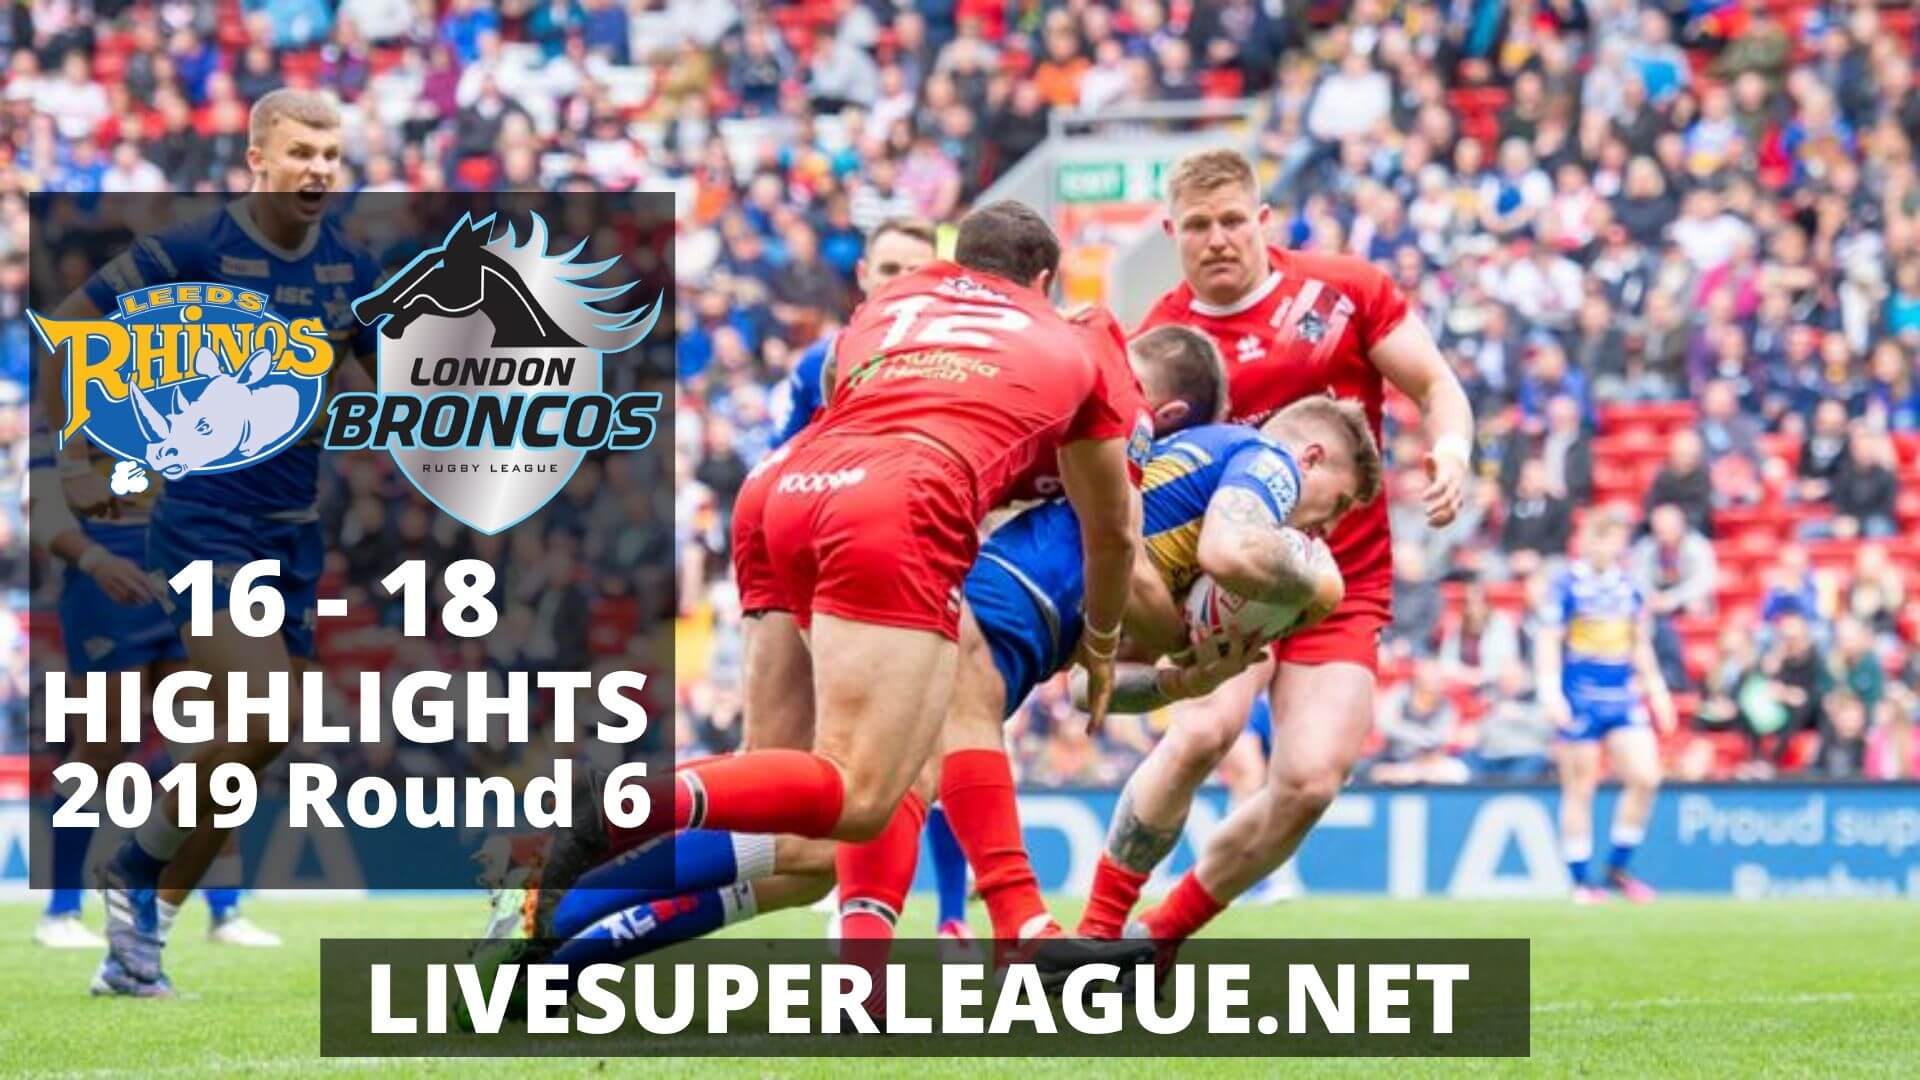 Leeds Rhinos vs London Broncos Highlights 2019 Round 6